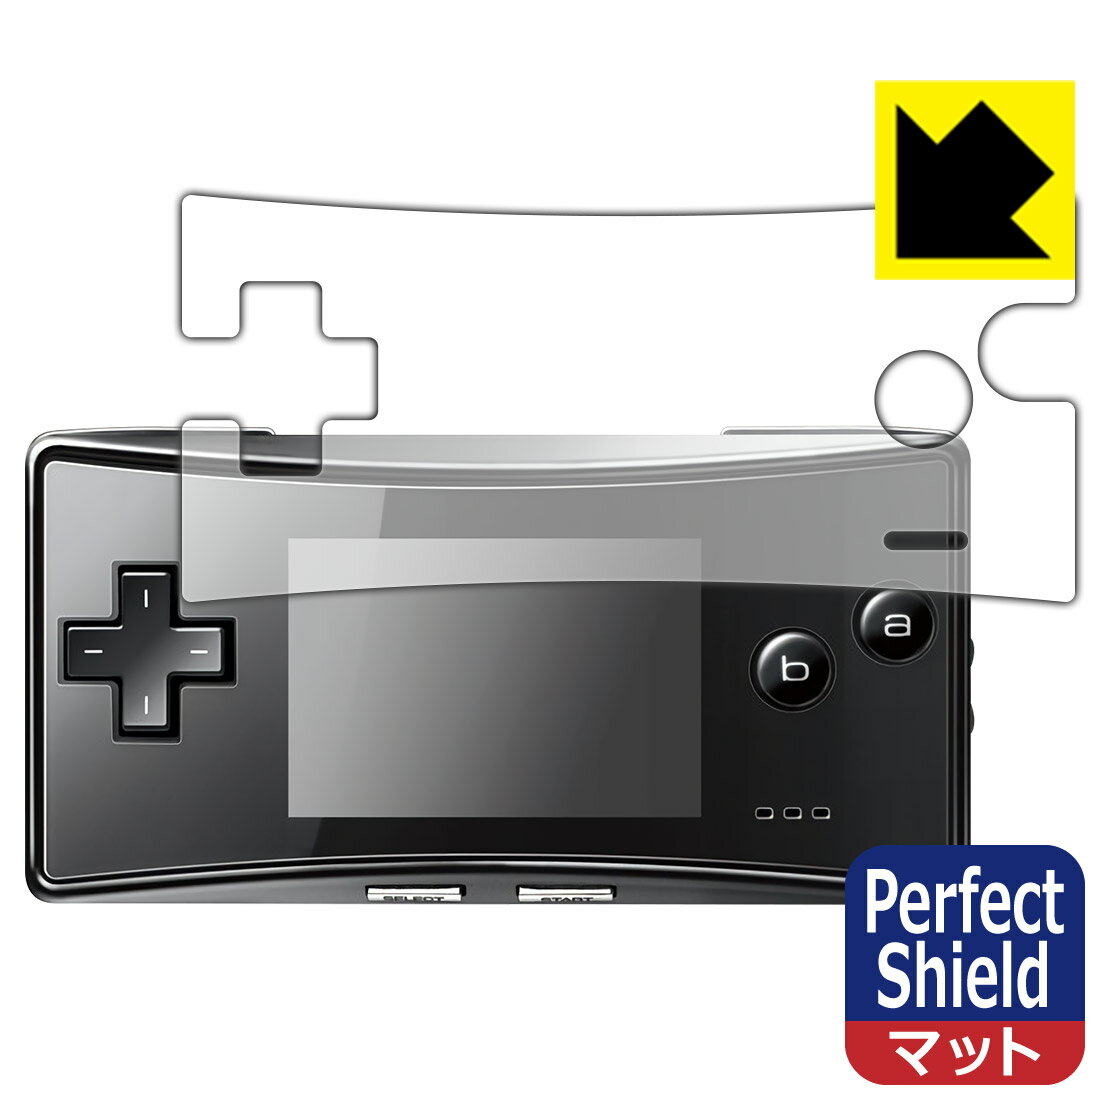 Perfect Shield ゲームボーイミクロ 用 液晶保護フィルム 日本製 自社製造直販 1